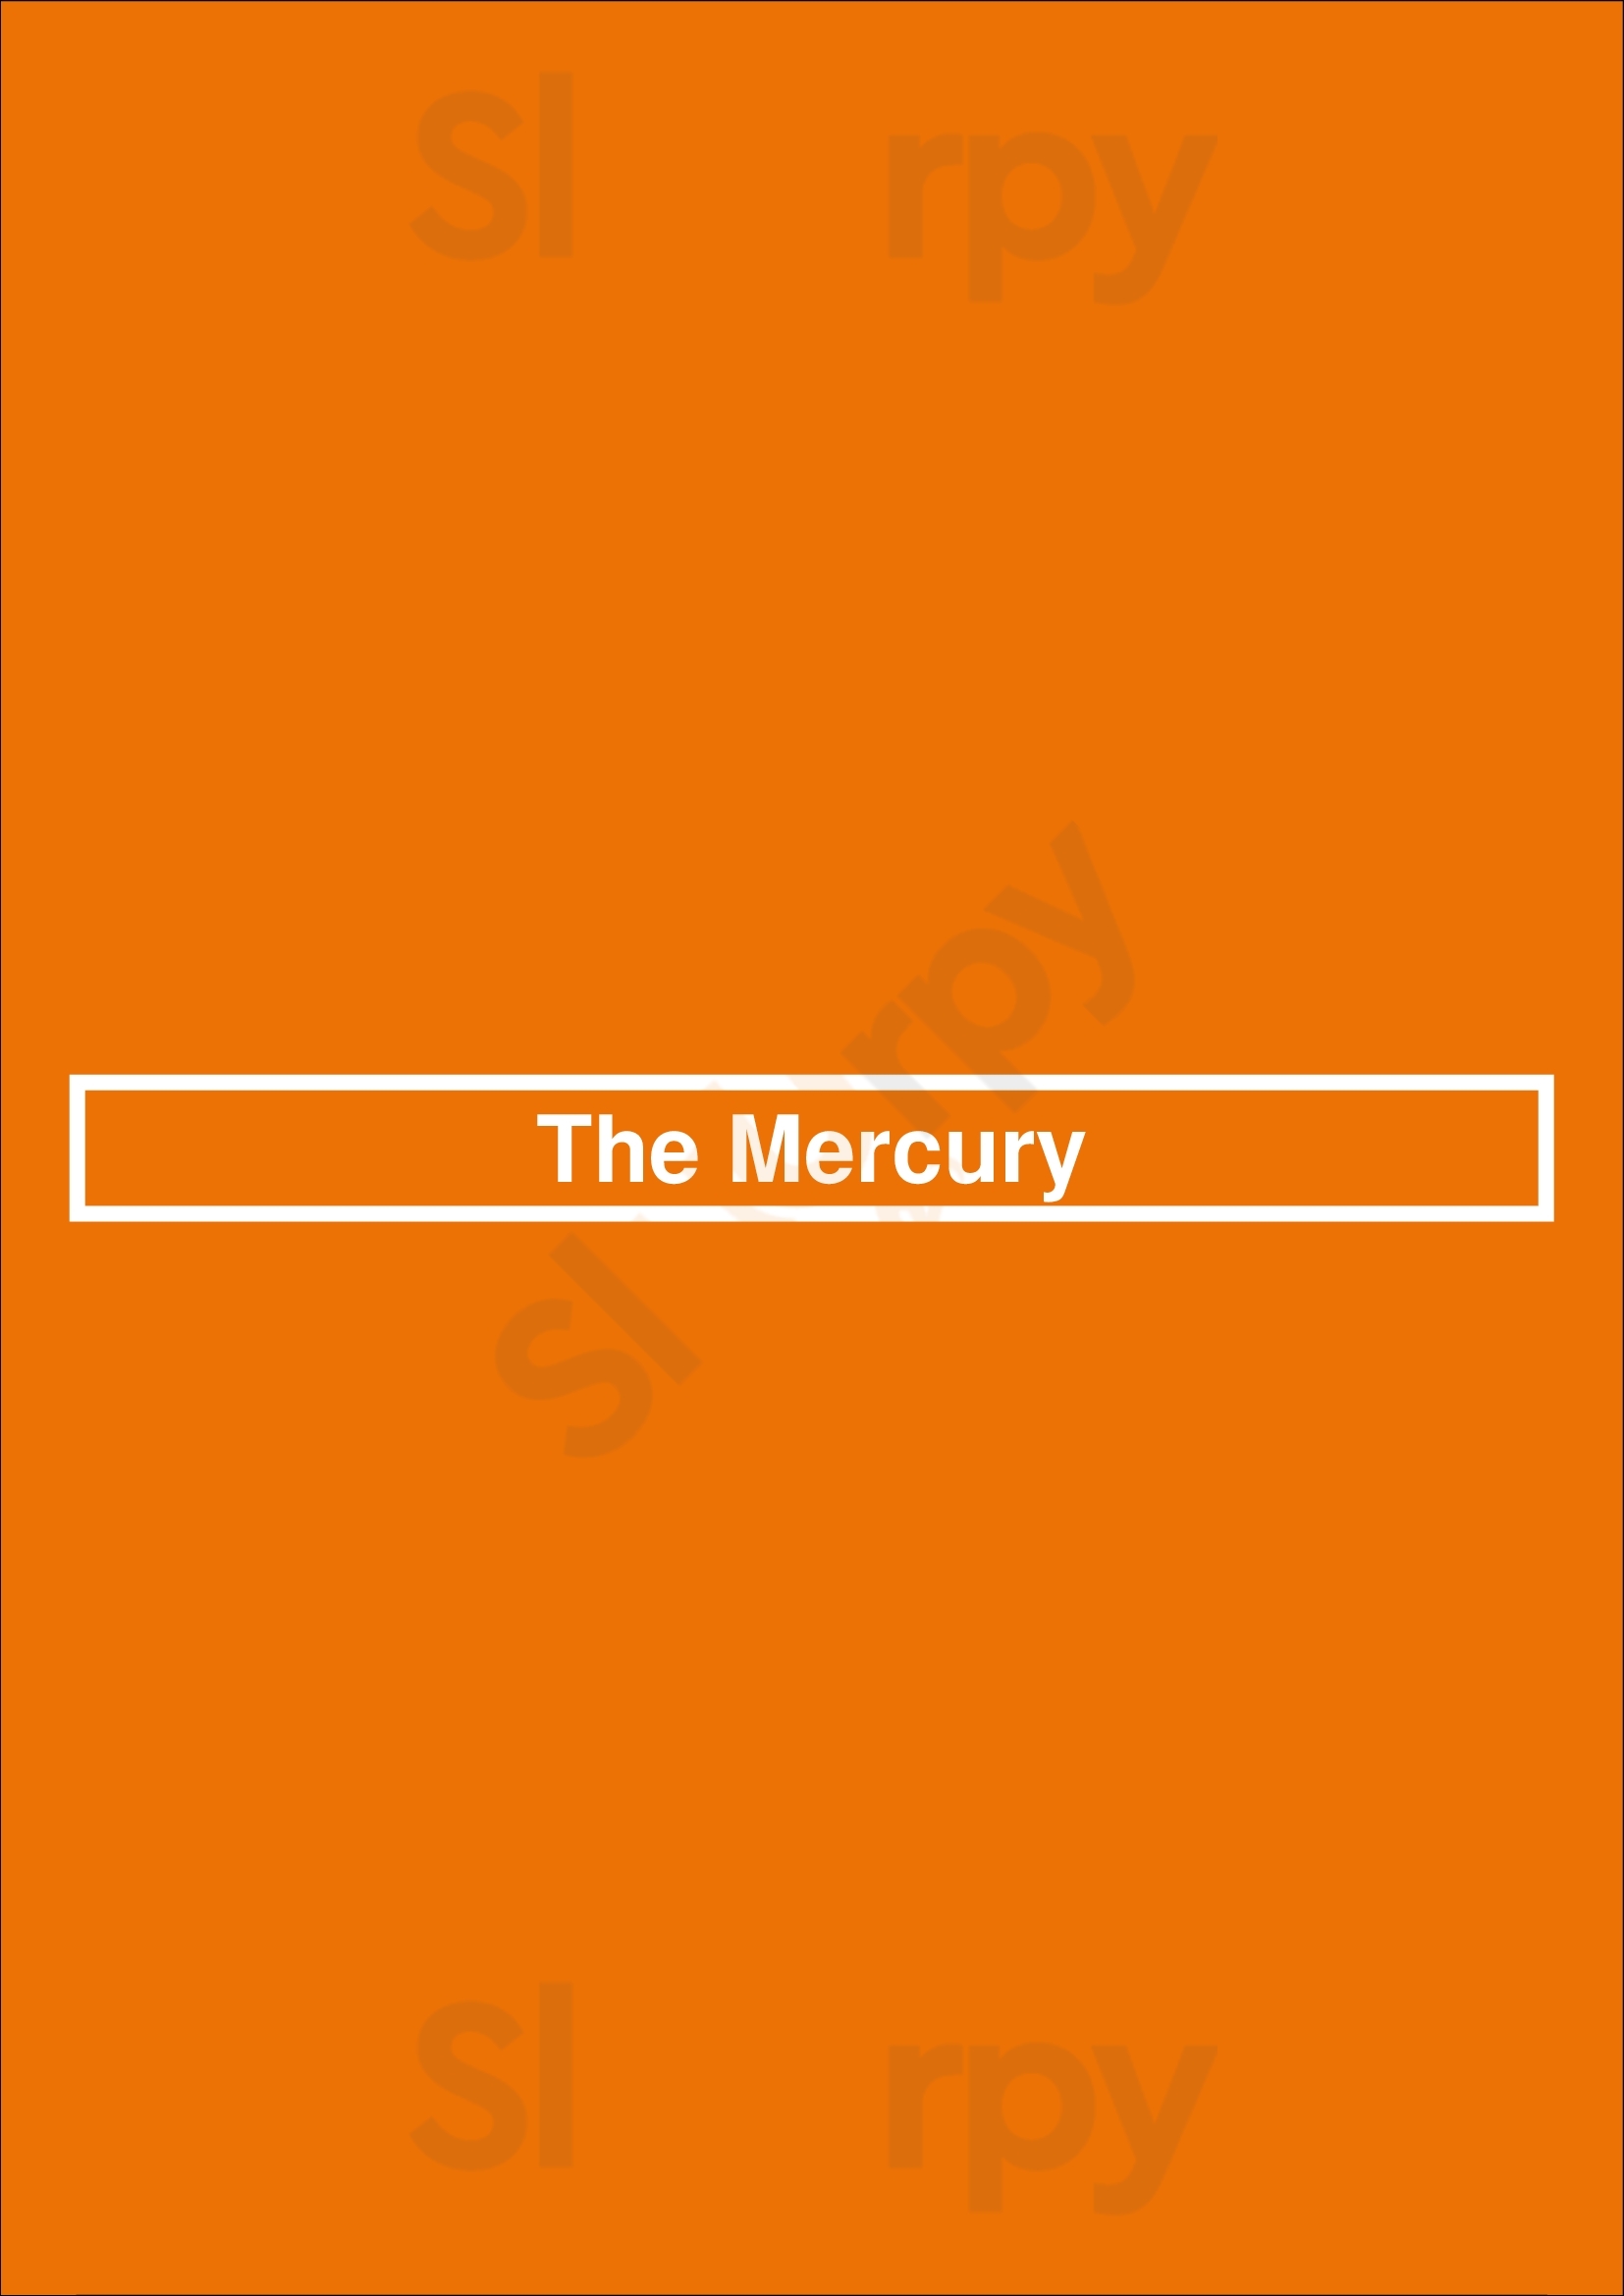 The Mercury Dallas Menu - 1